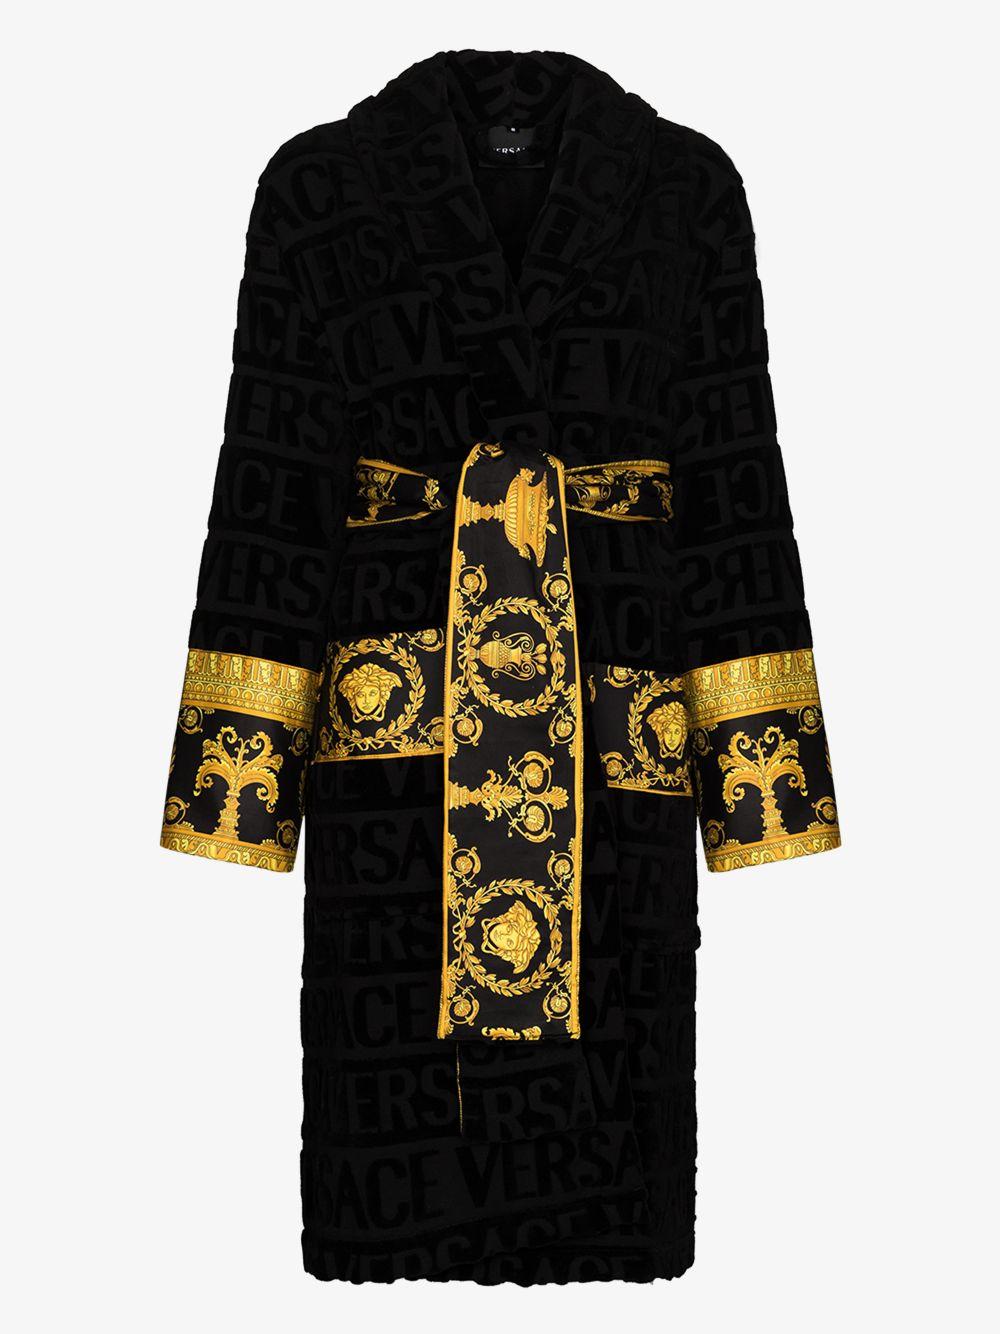 Versace Baroque Print Cotton Robe in Black - Lyst